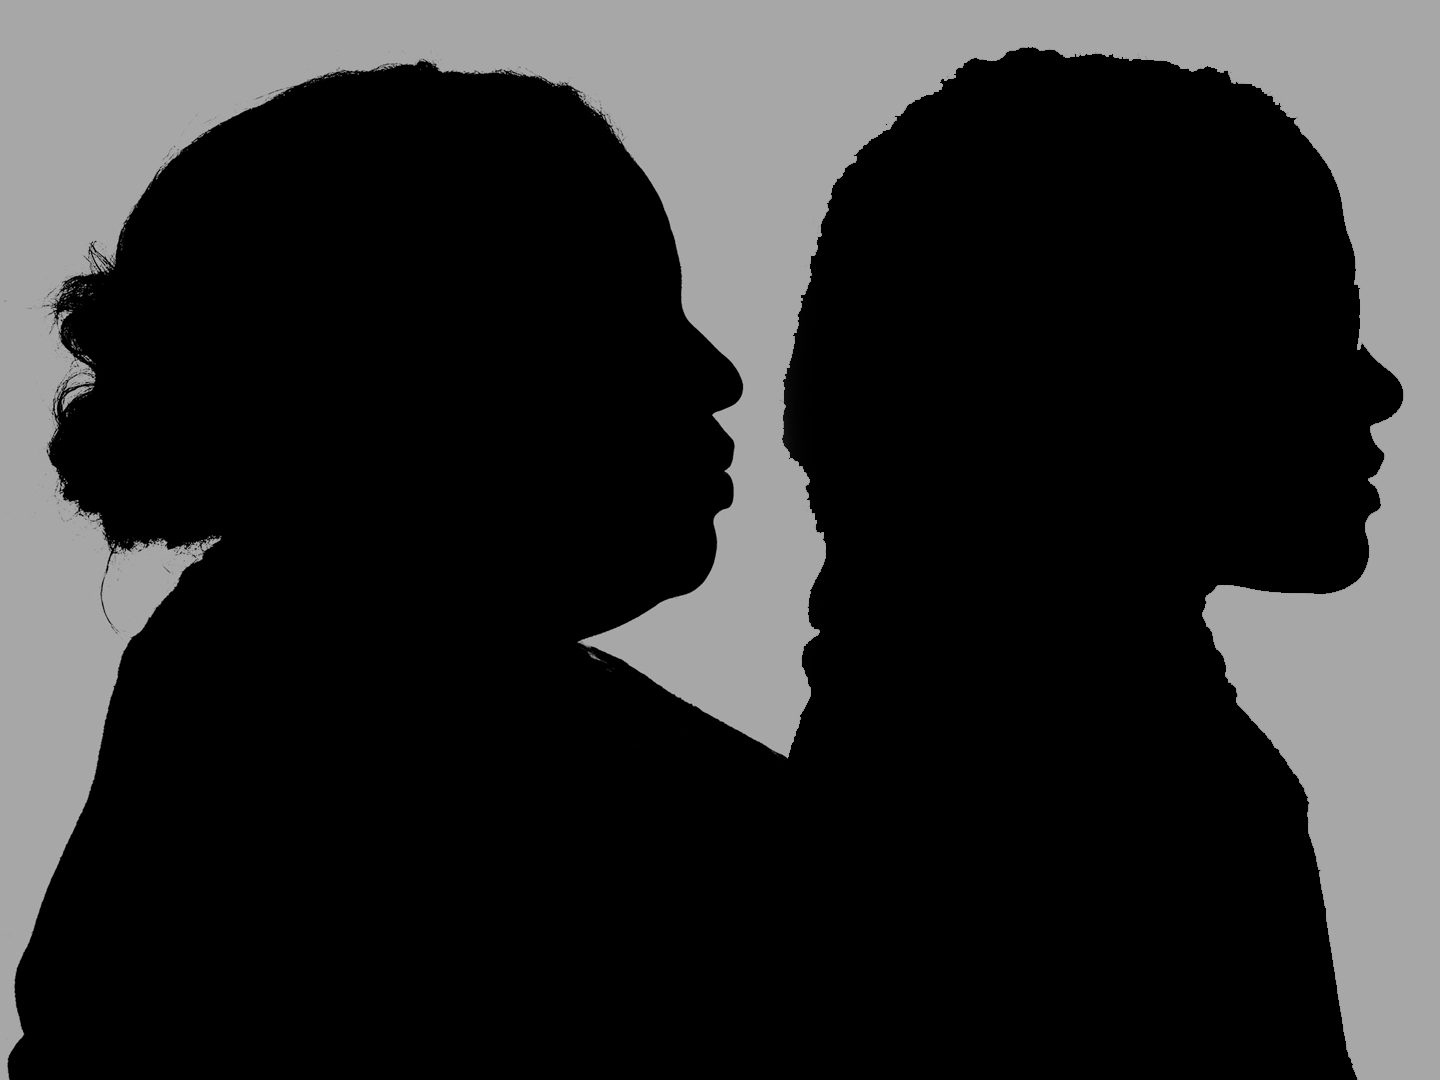  Silhouette of two Black women.